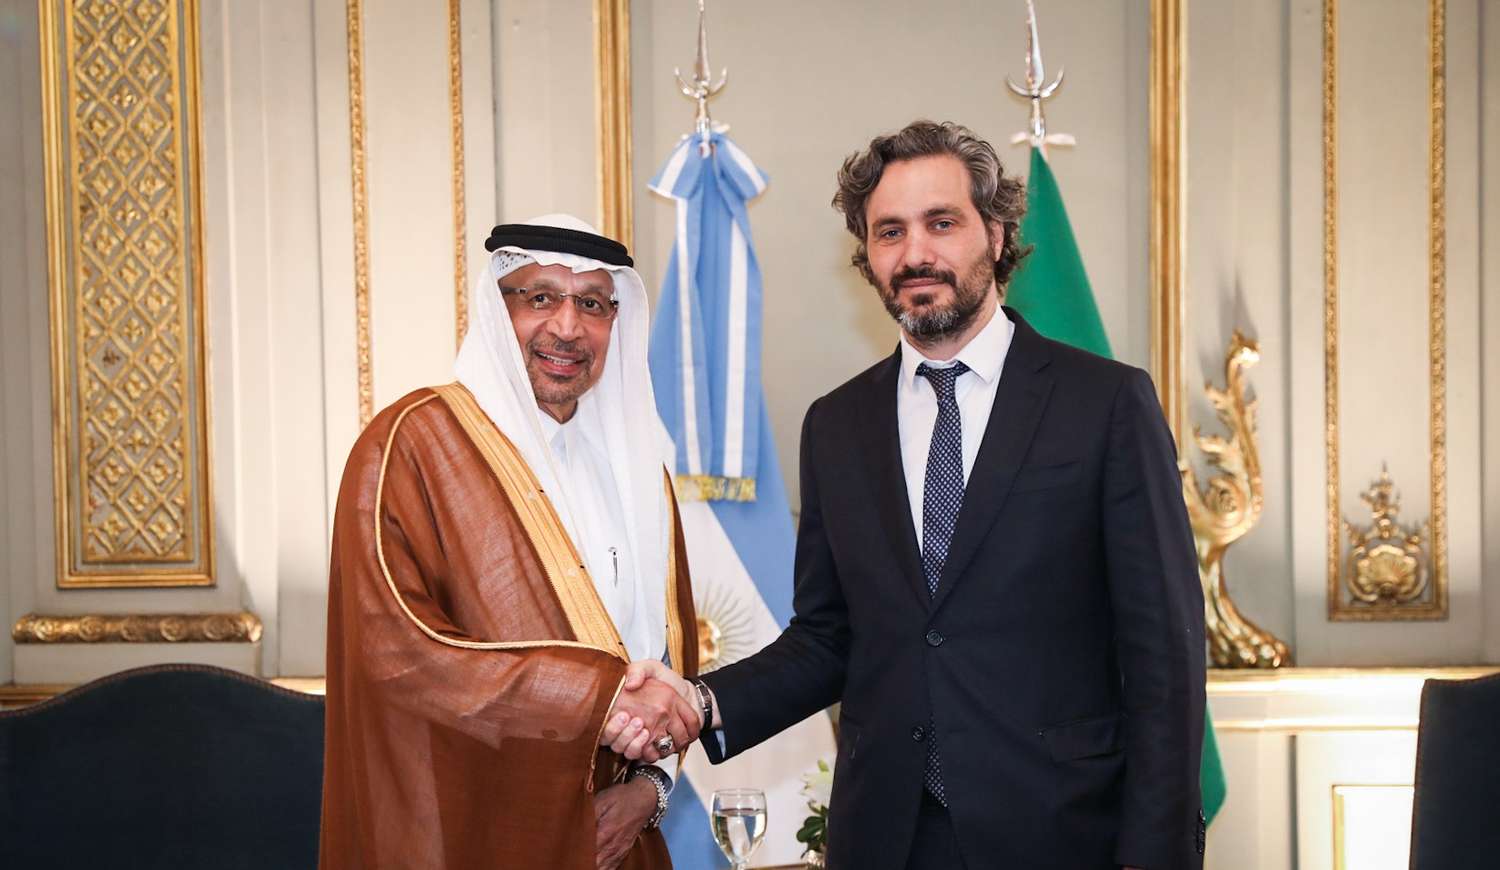 El canciller Santiago Cafiero recibió al ministro de Inversiones de Arabia Saudita, Khalid Al-Falih.